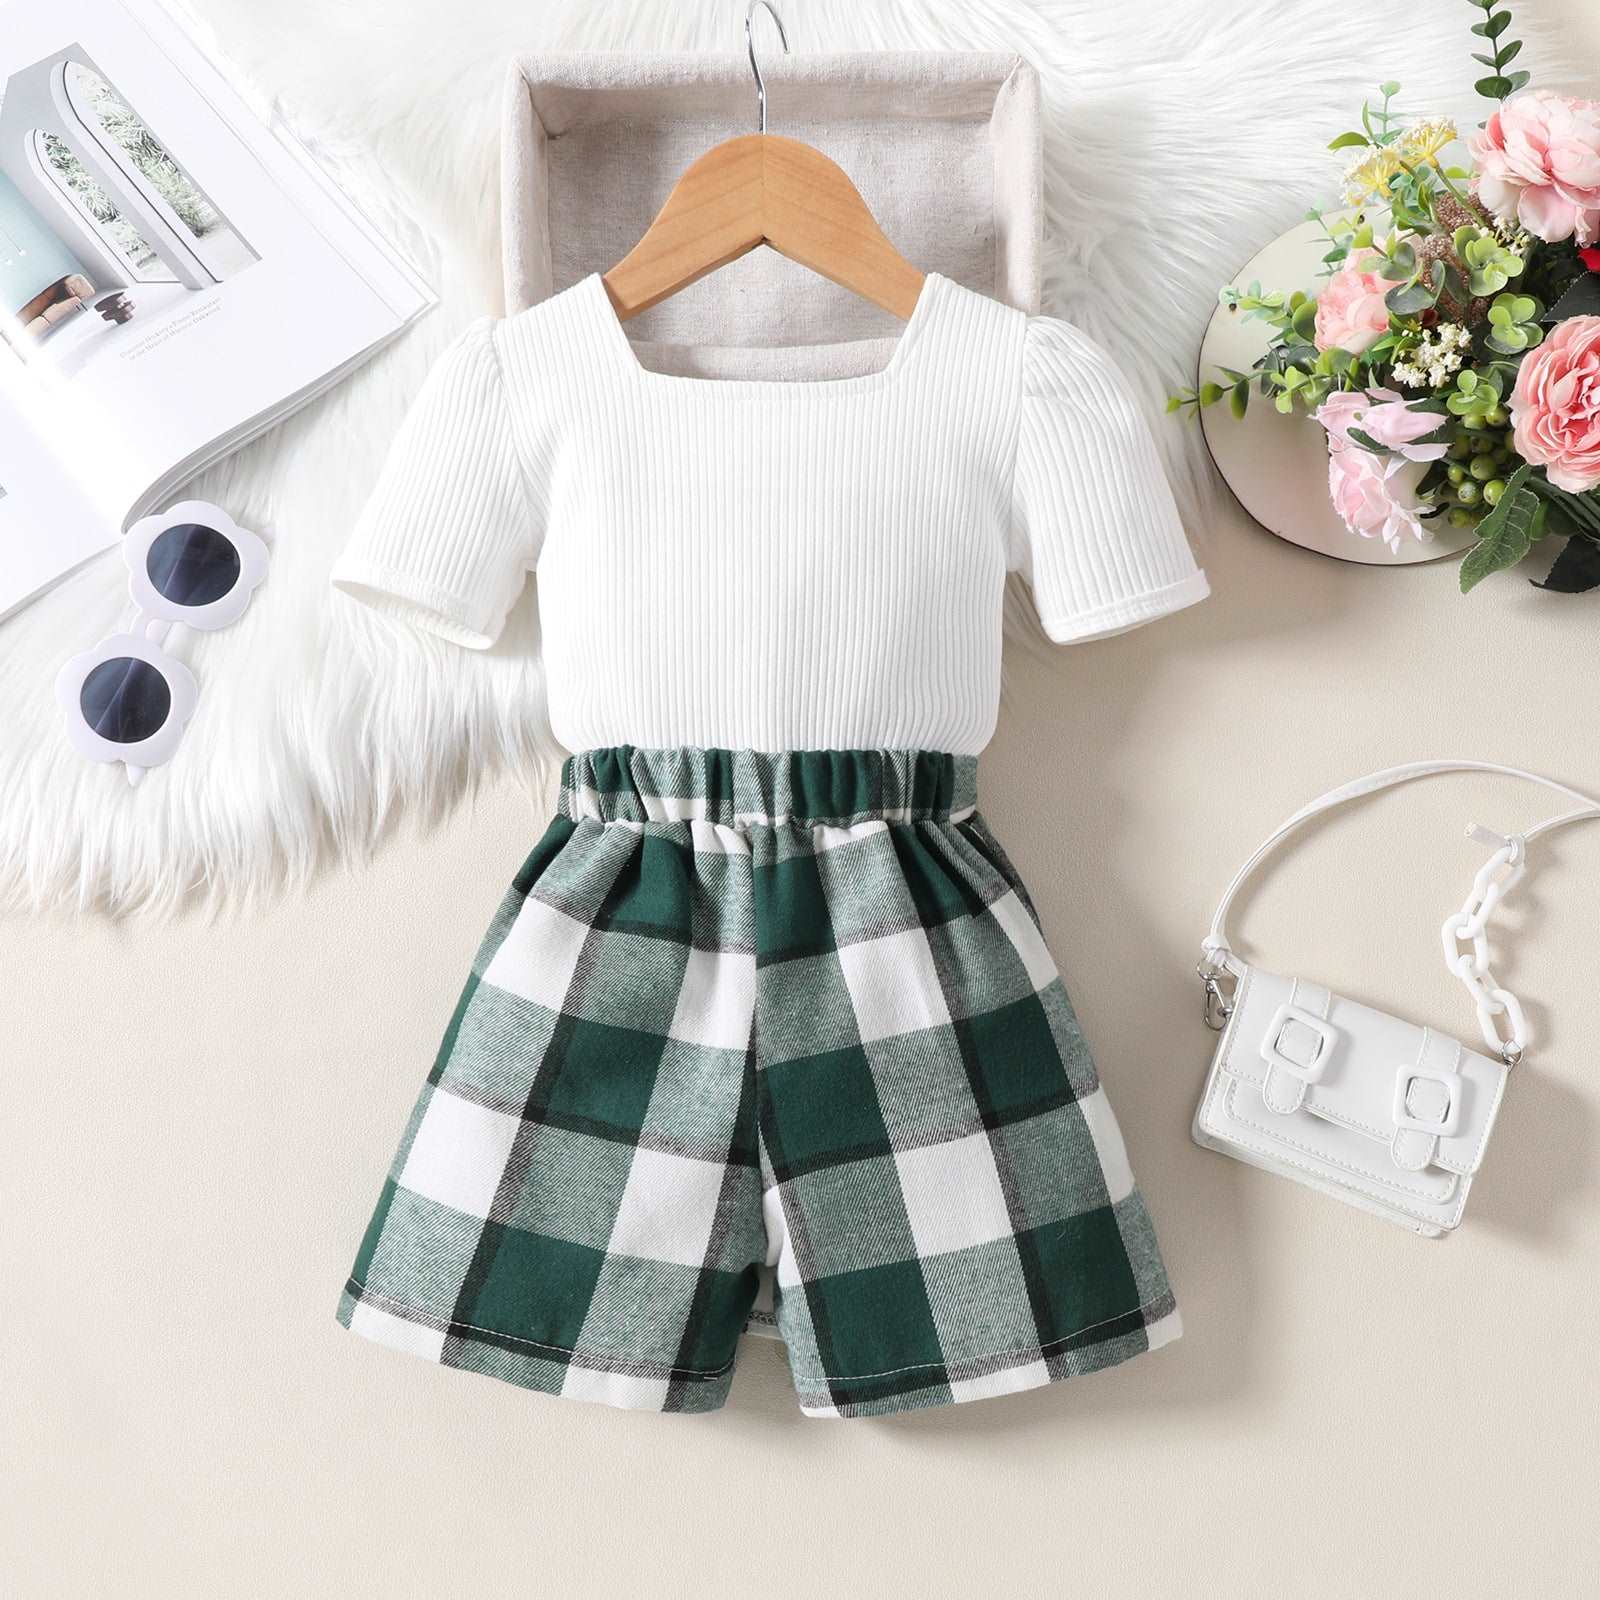 Baby Girl Short Sleeved Top and Irregular Plaid Short Pantskirt Outfit Set